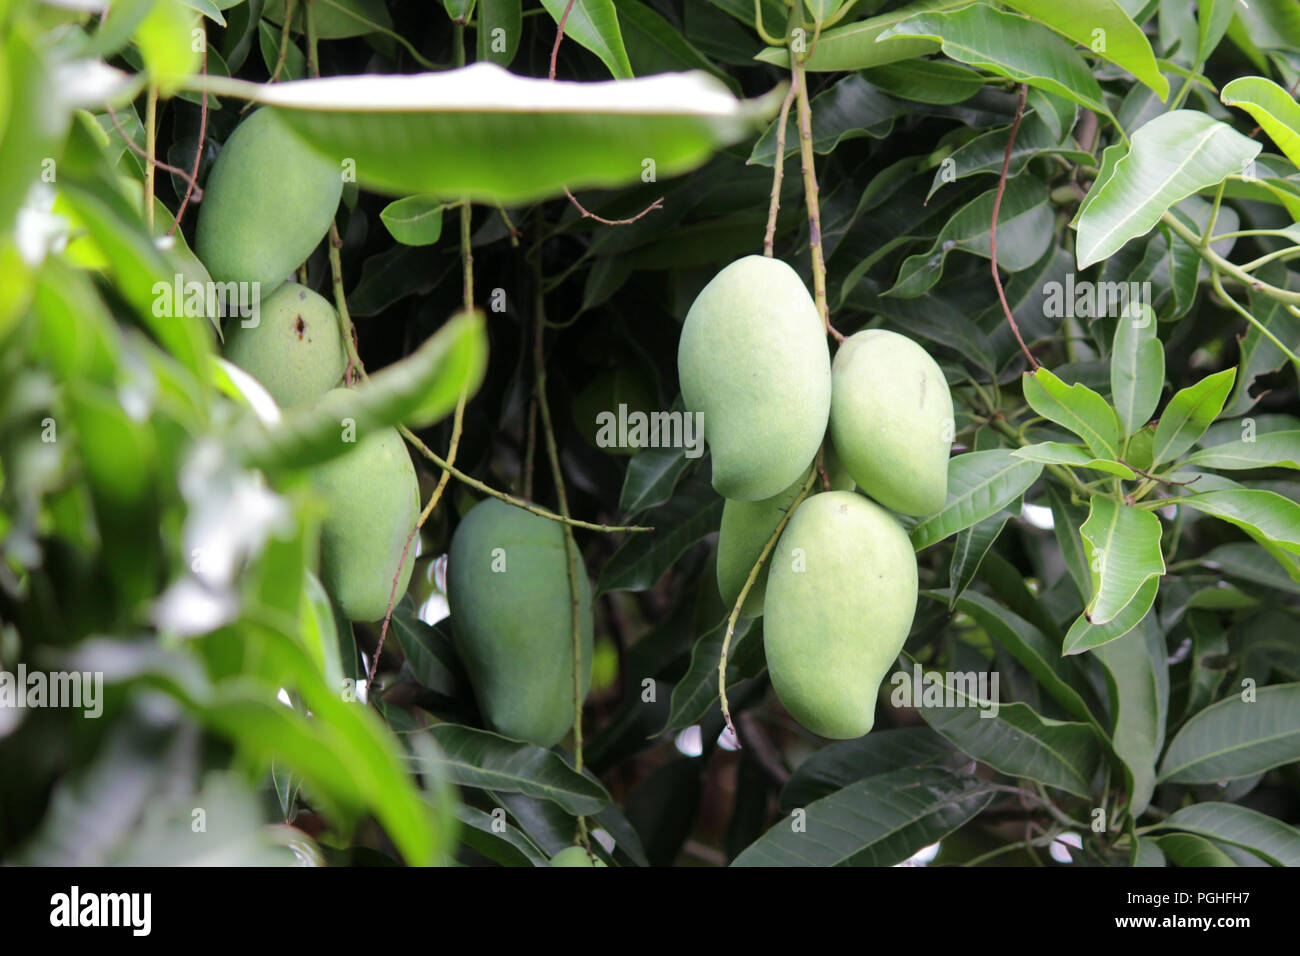 https://c8.alamy.com/comp/PGHFH7/young-mango-fruit-on-tree-in-organic-farm-PGHFH7.jpg